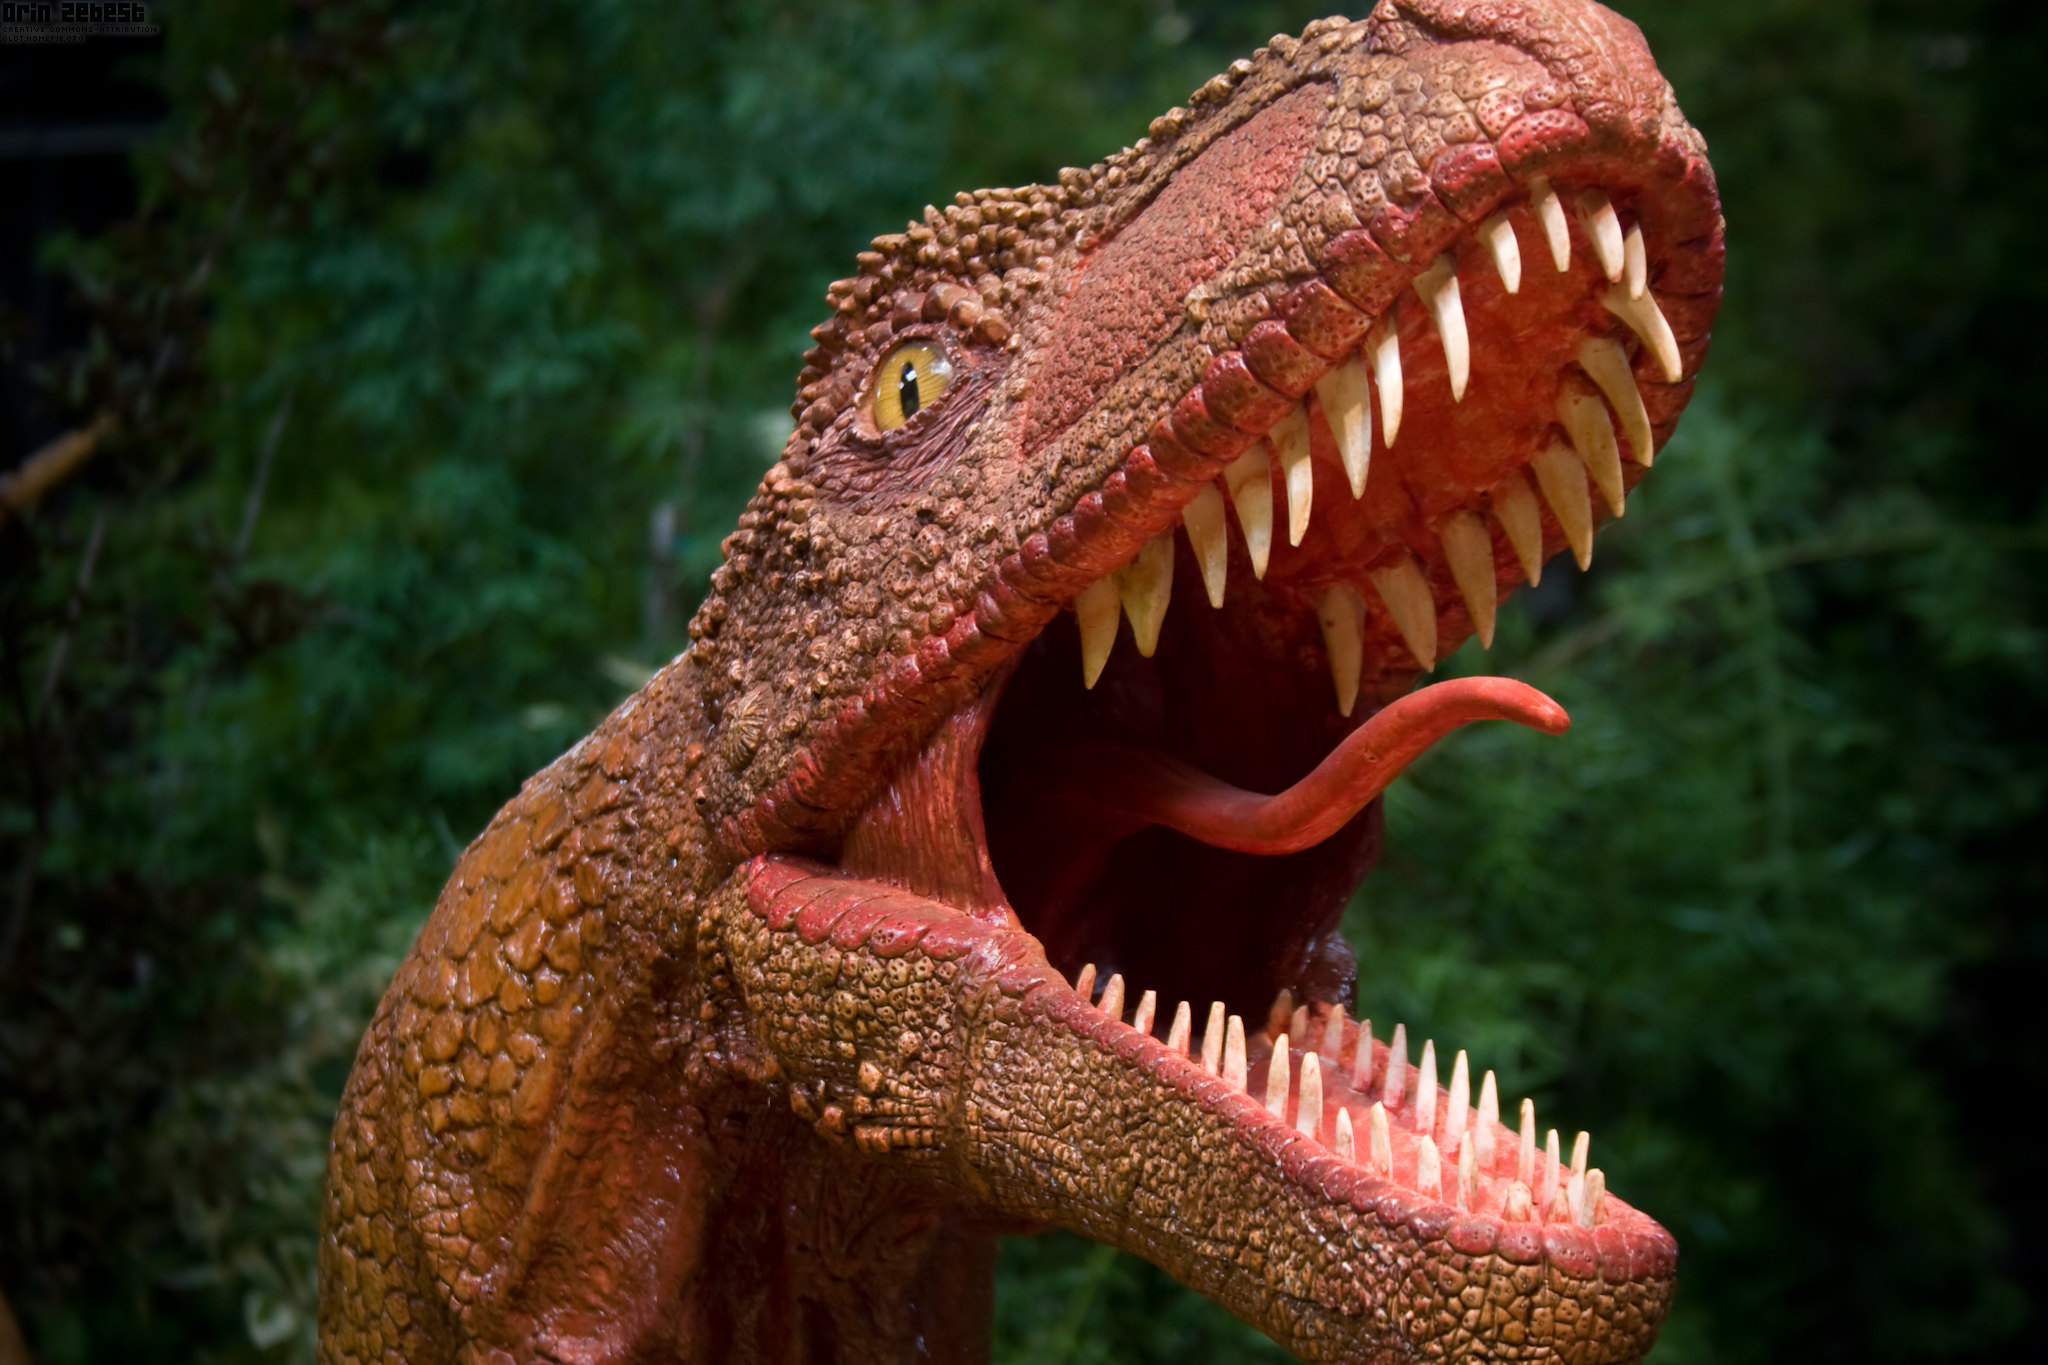 principio léxico Ocurrir Dinosaurs May Have Cooed, Not Roared | Popular Science